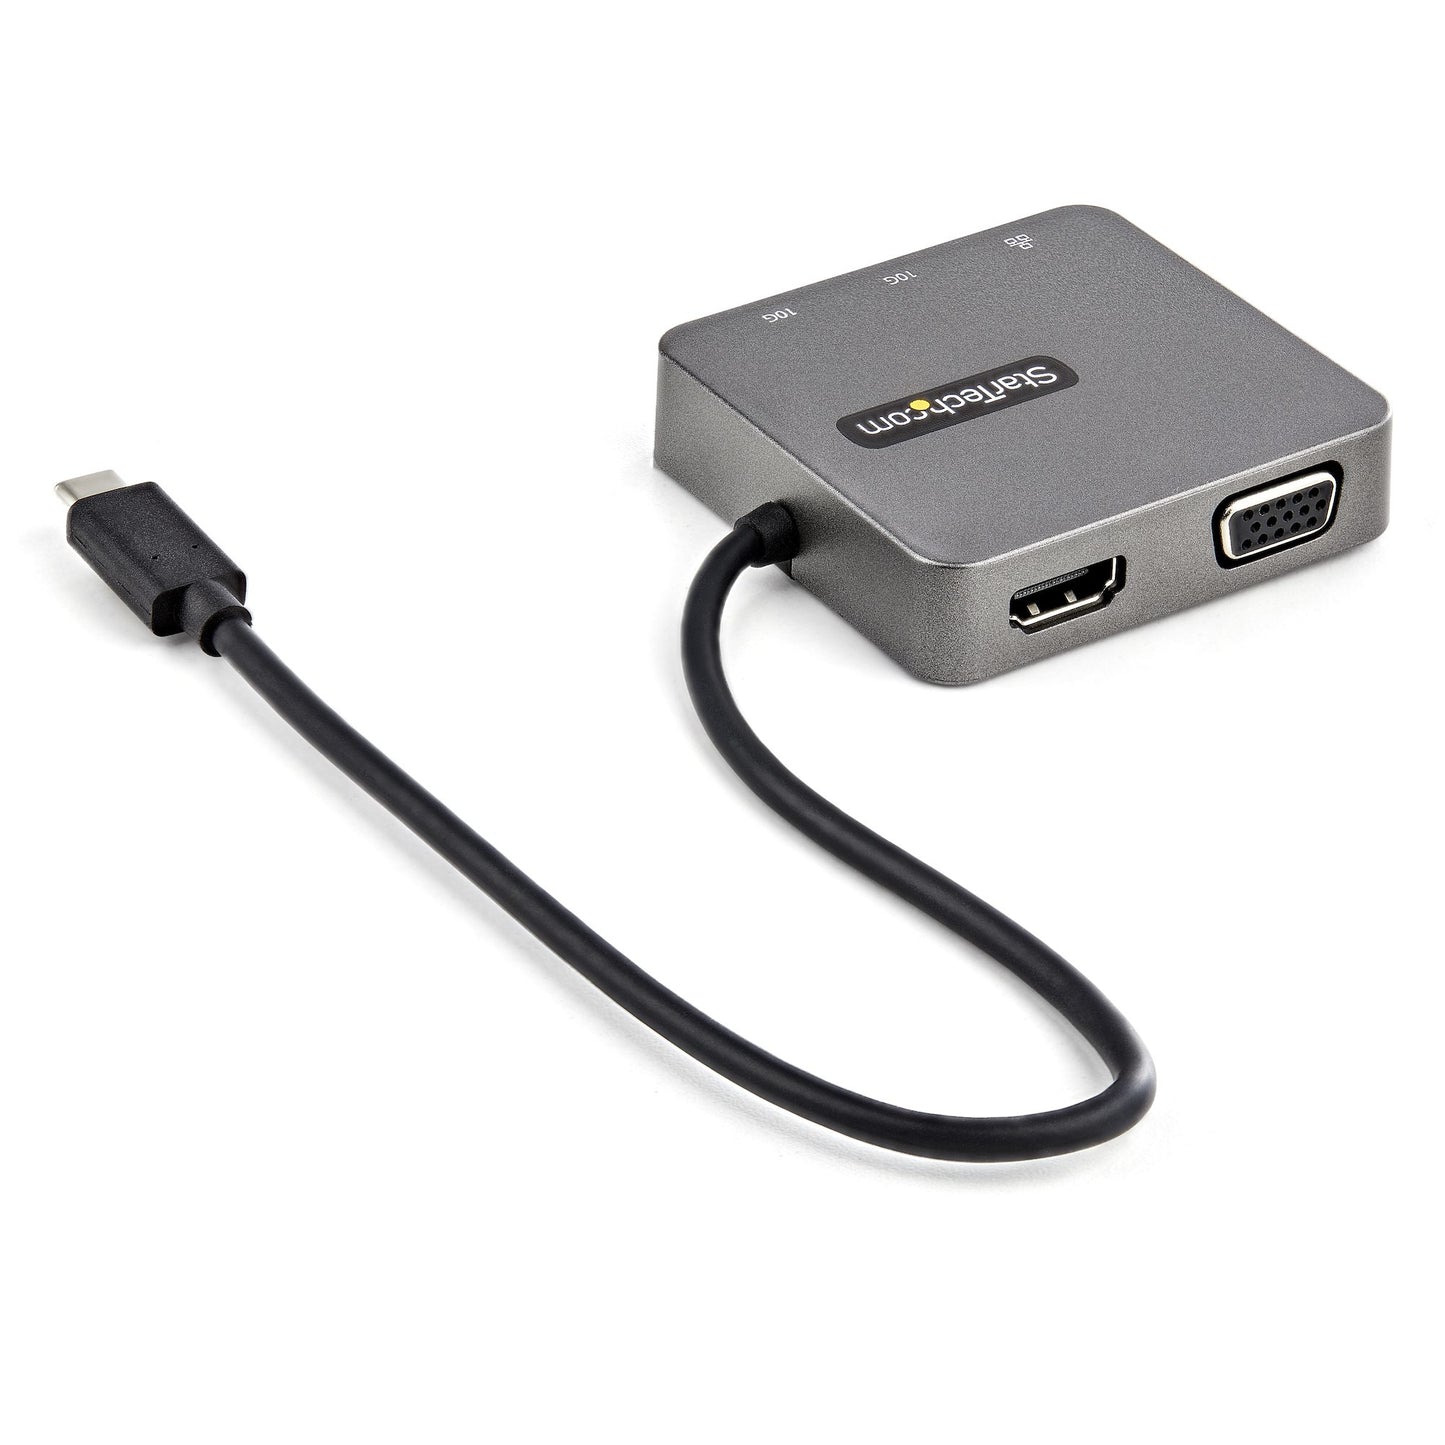 StarTech.com Docking Station USB C, 1x USB A, 1x HDMI/VGA/RJ-45, Negro/Plata